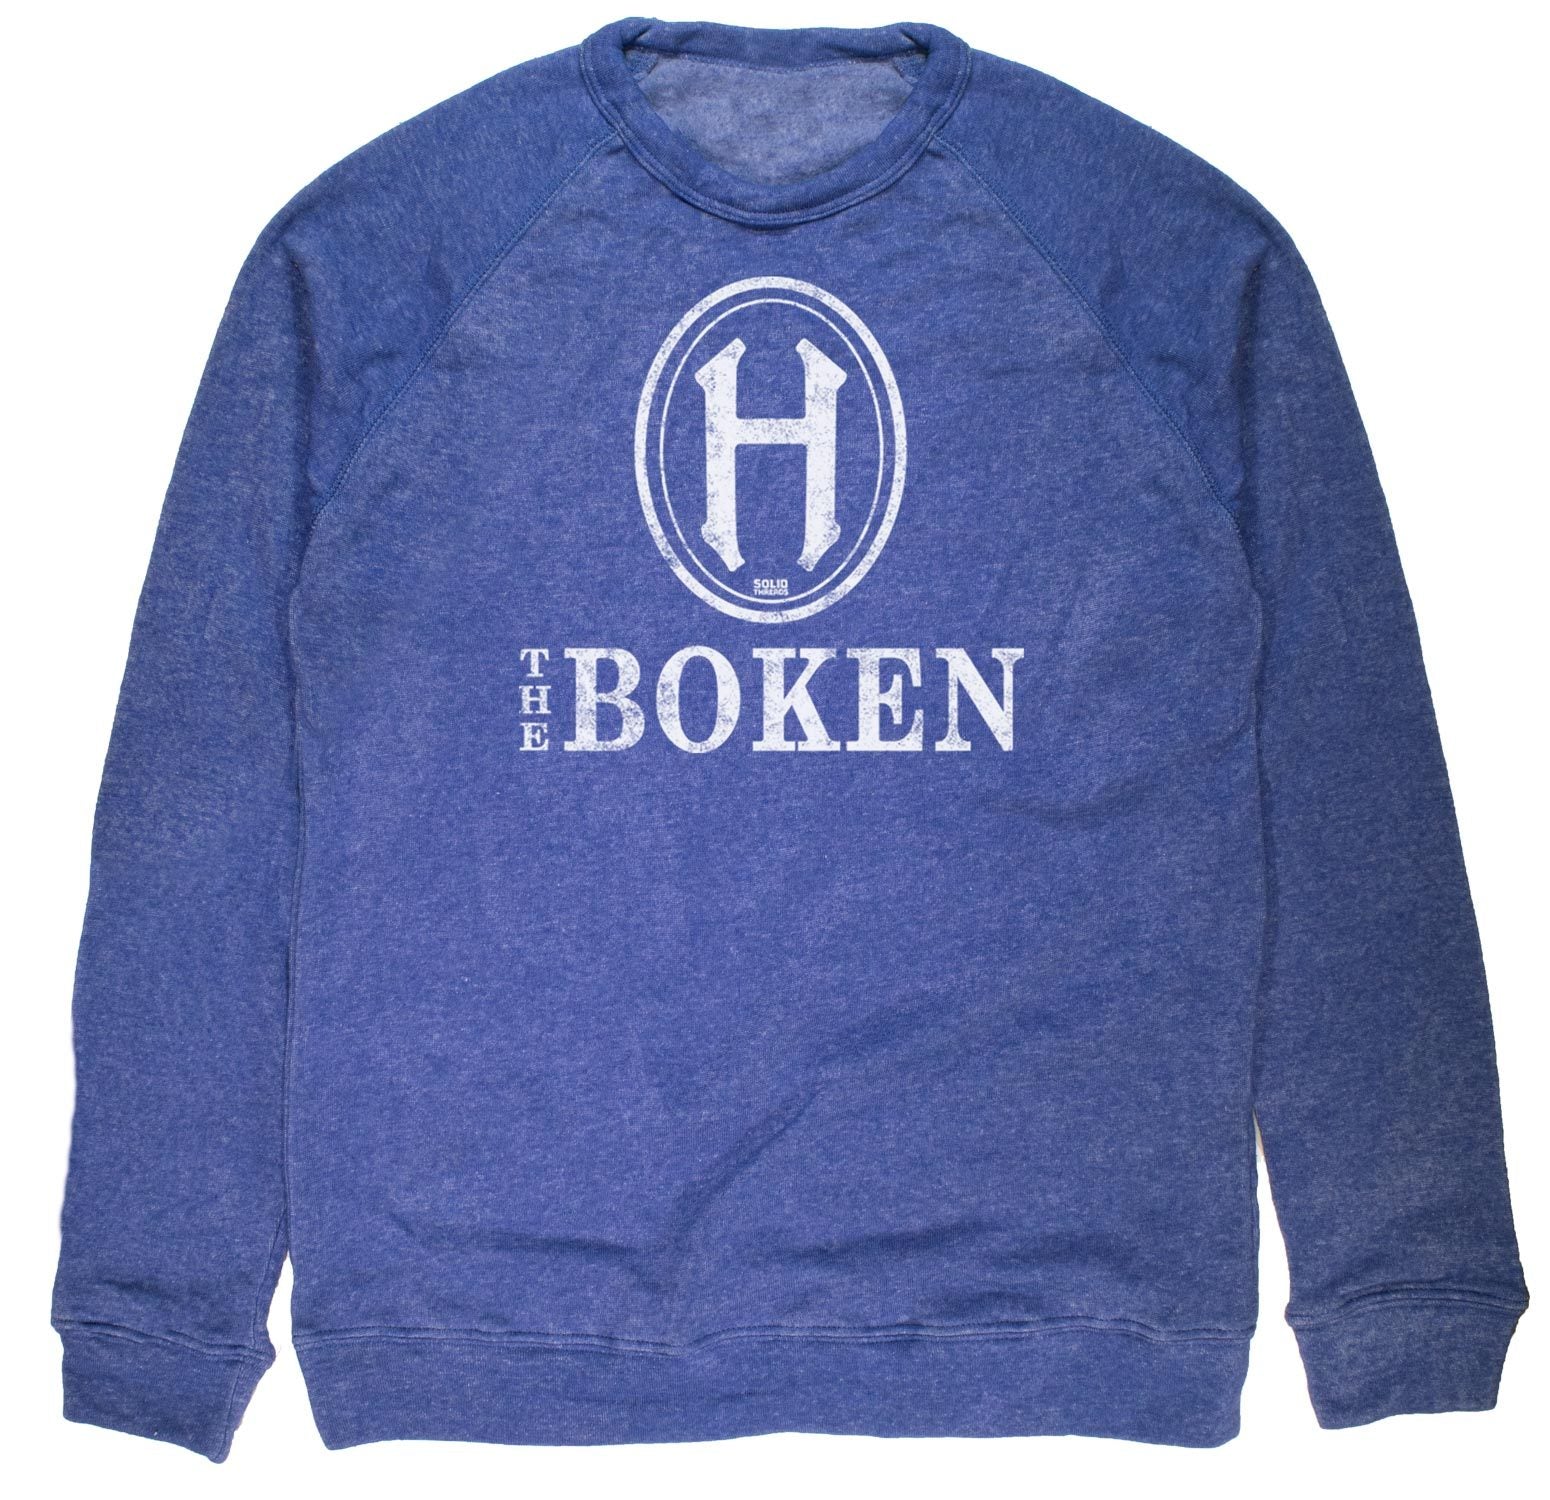 The Boken Vintage Inspired Fleece Crewneck Sweatshirt with retro Hoboken graphic | Solid Threads